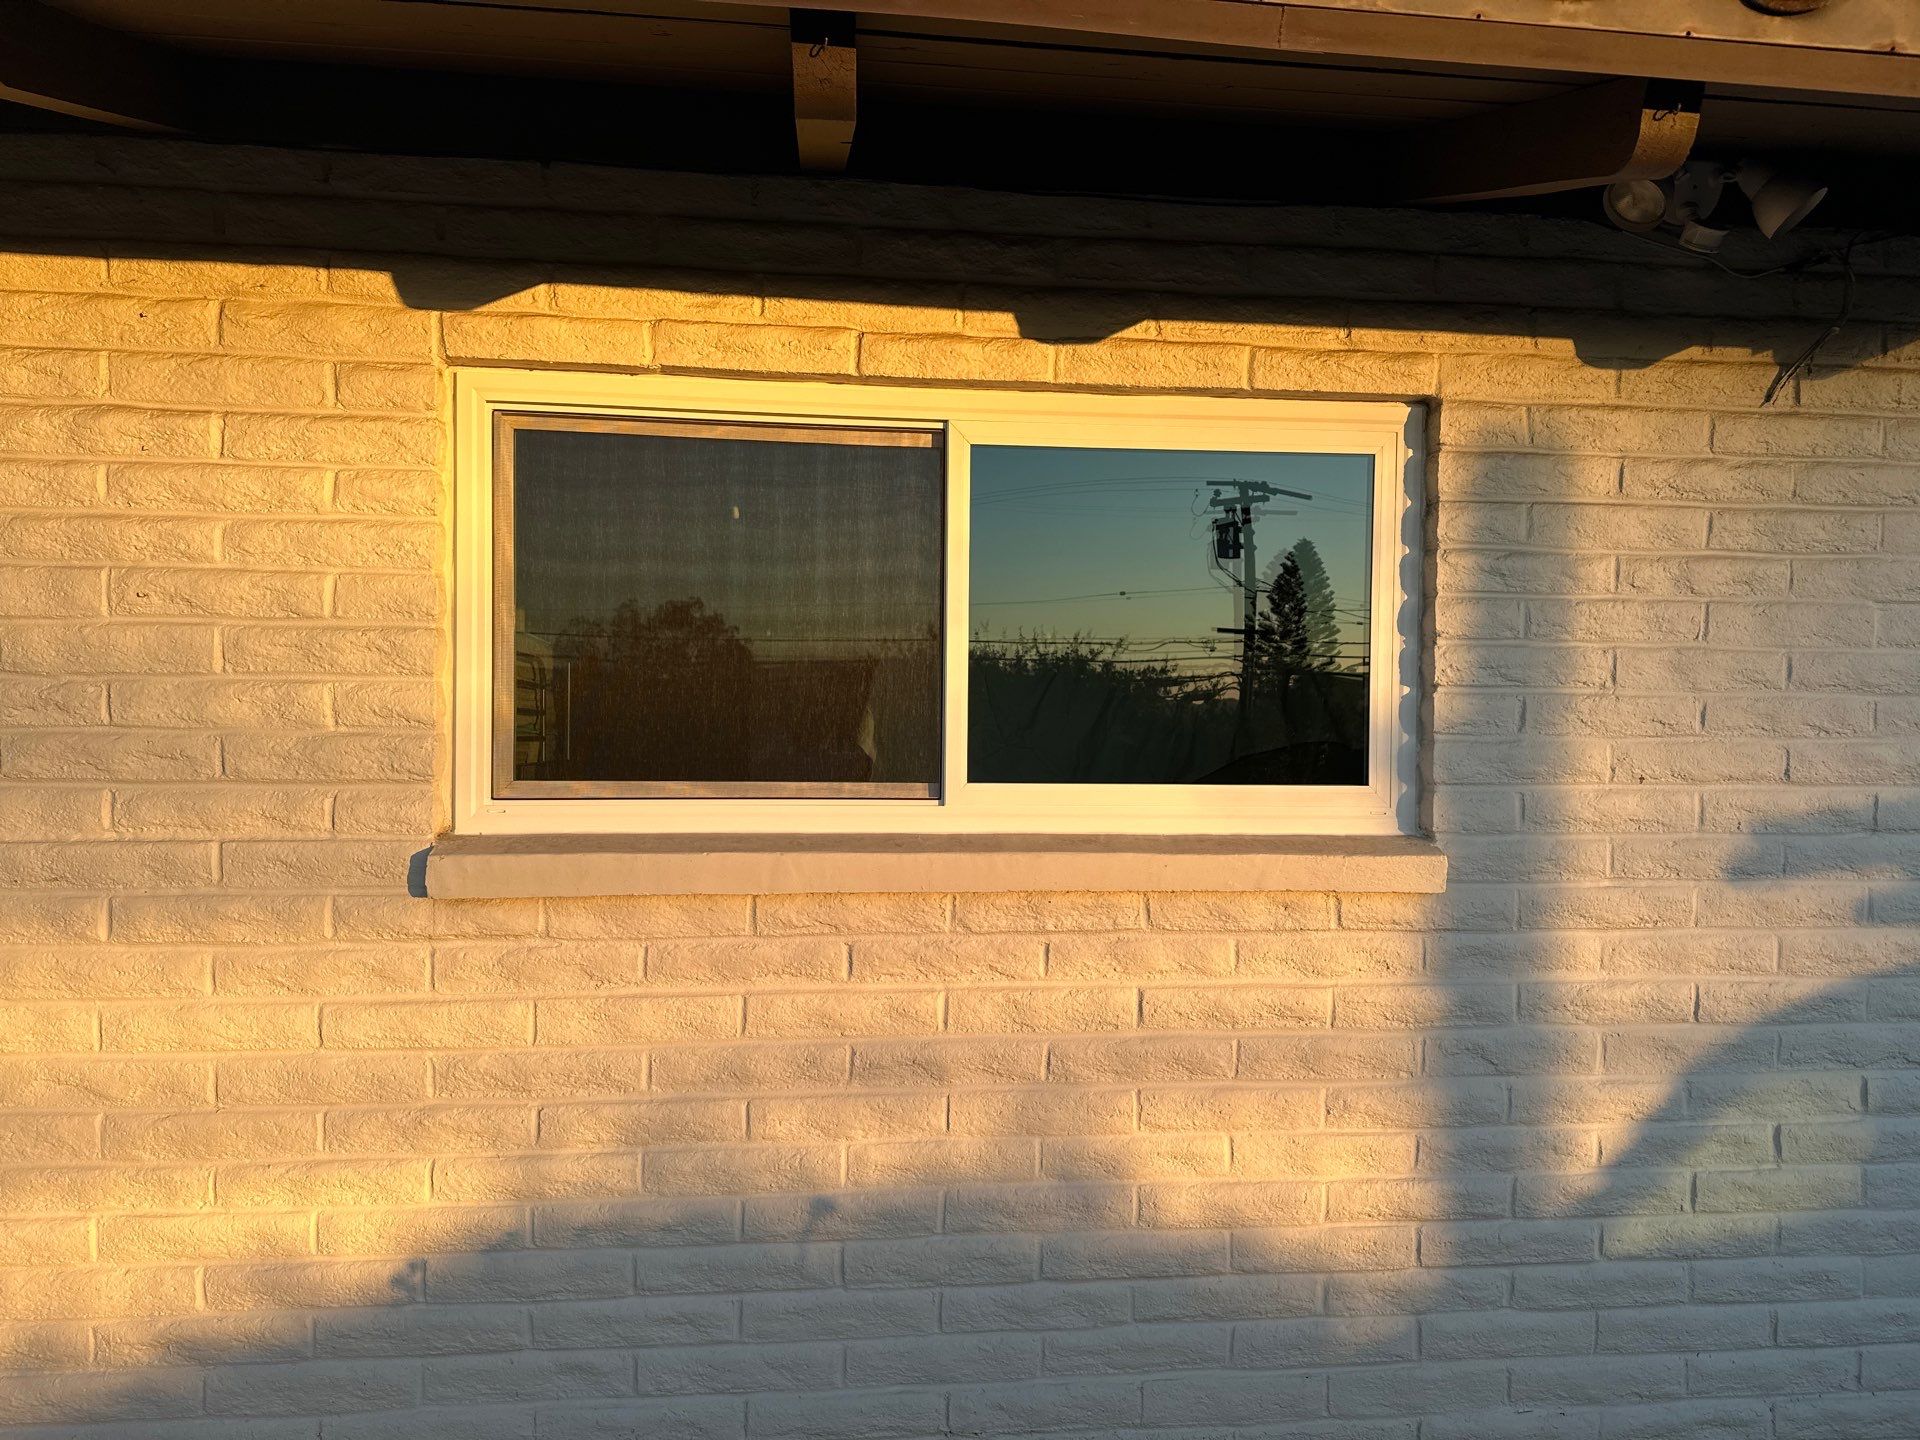 Slider Window Replacement in Escondido, CA